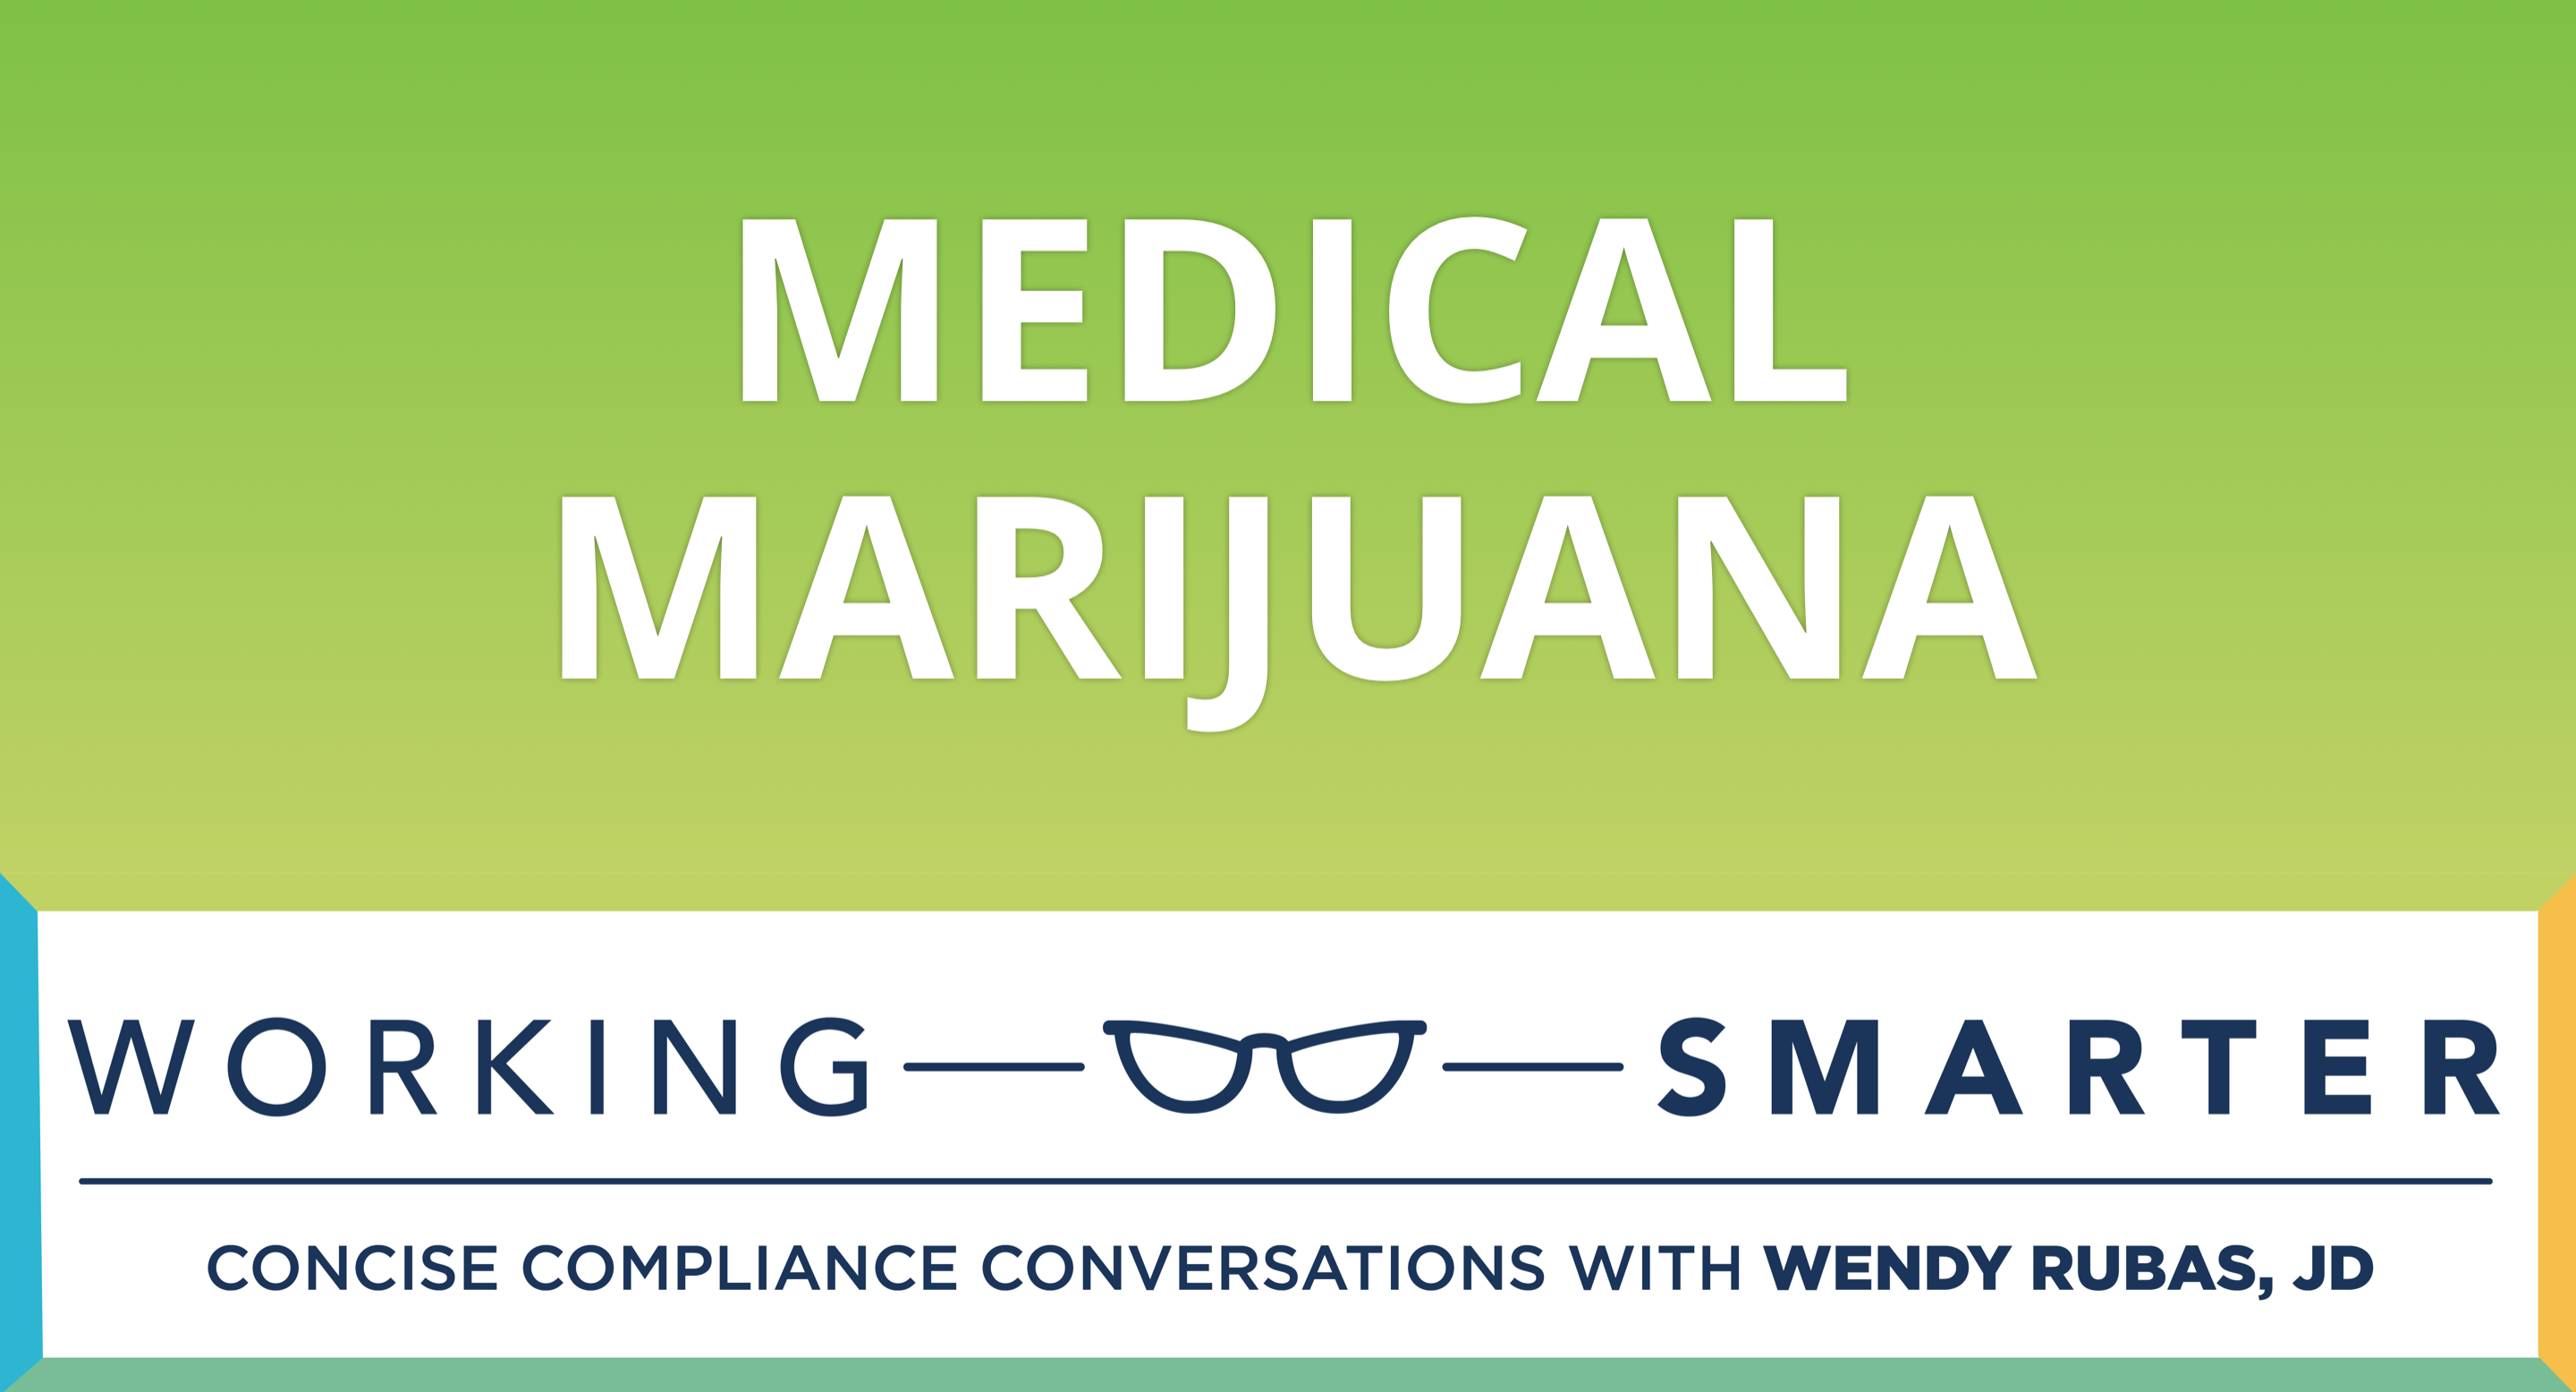 Working Smarter: Medical Marijuana